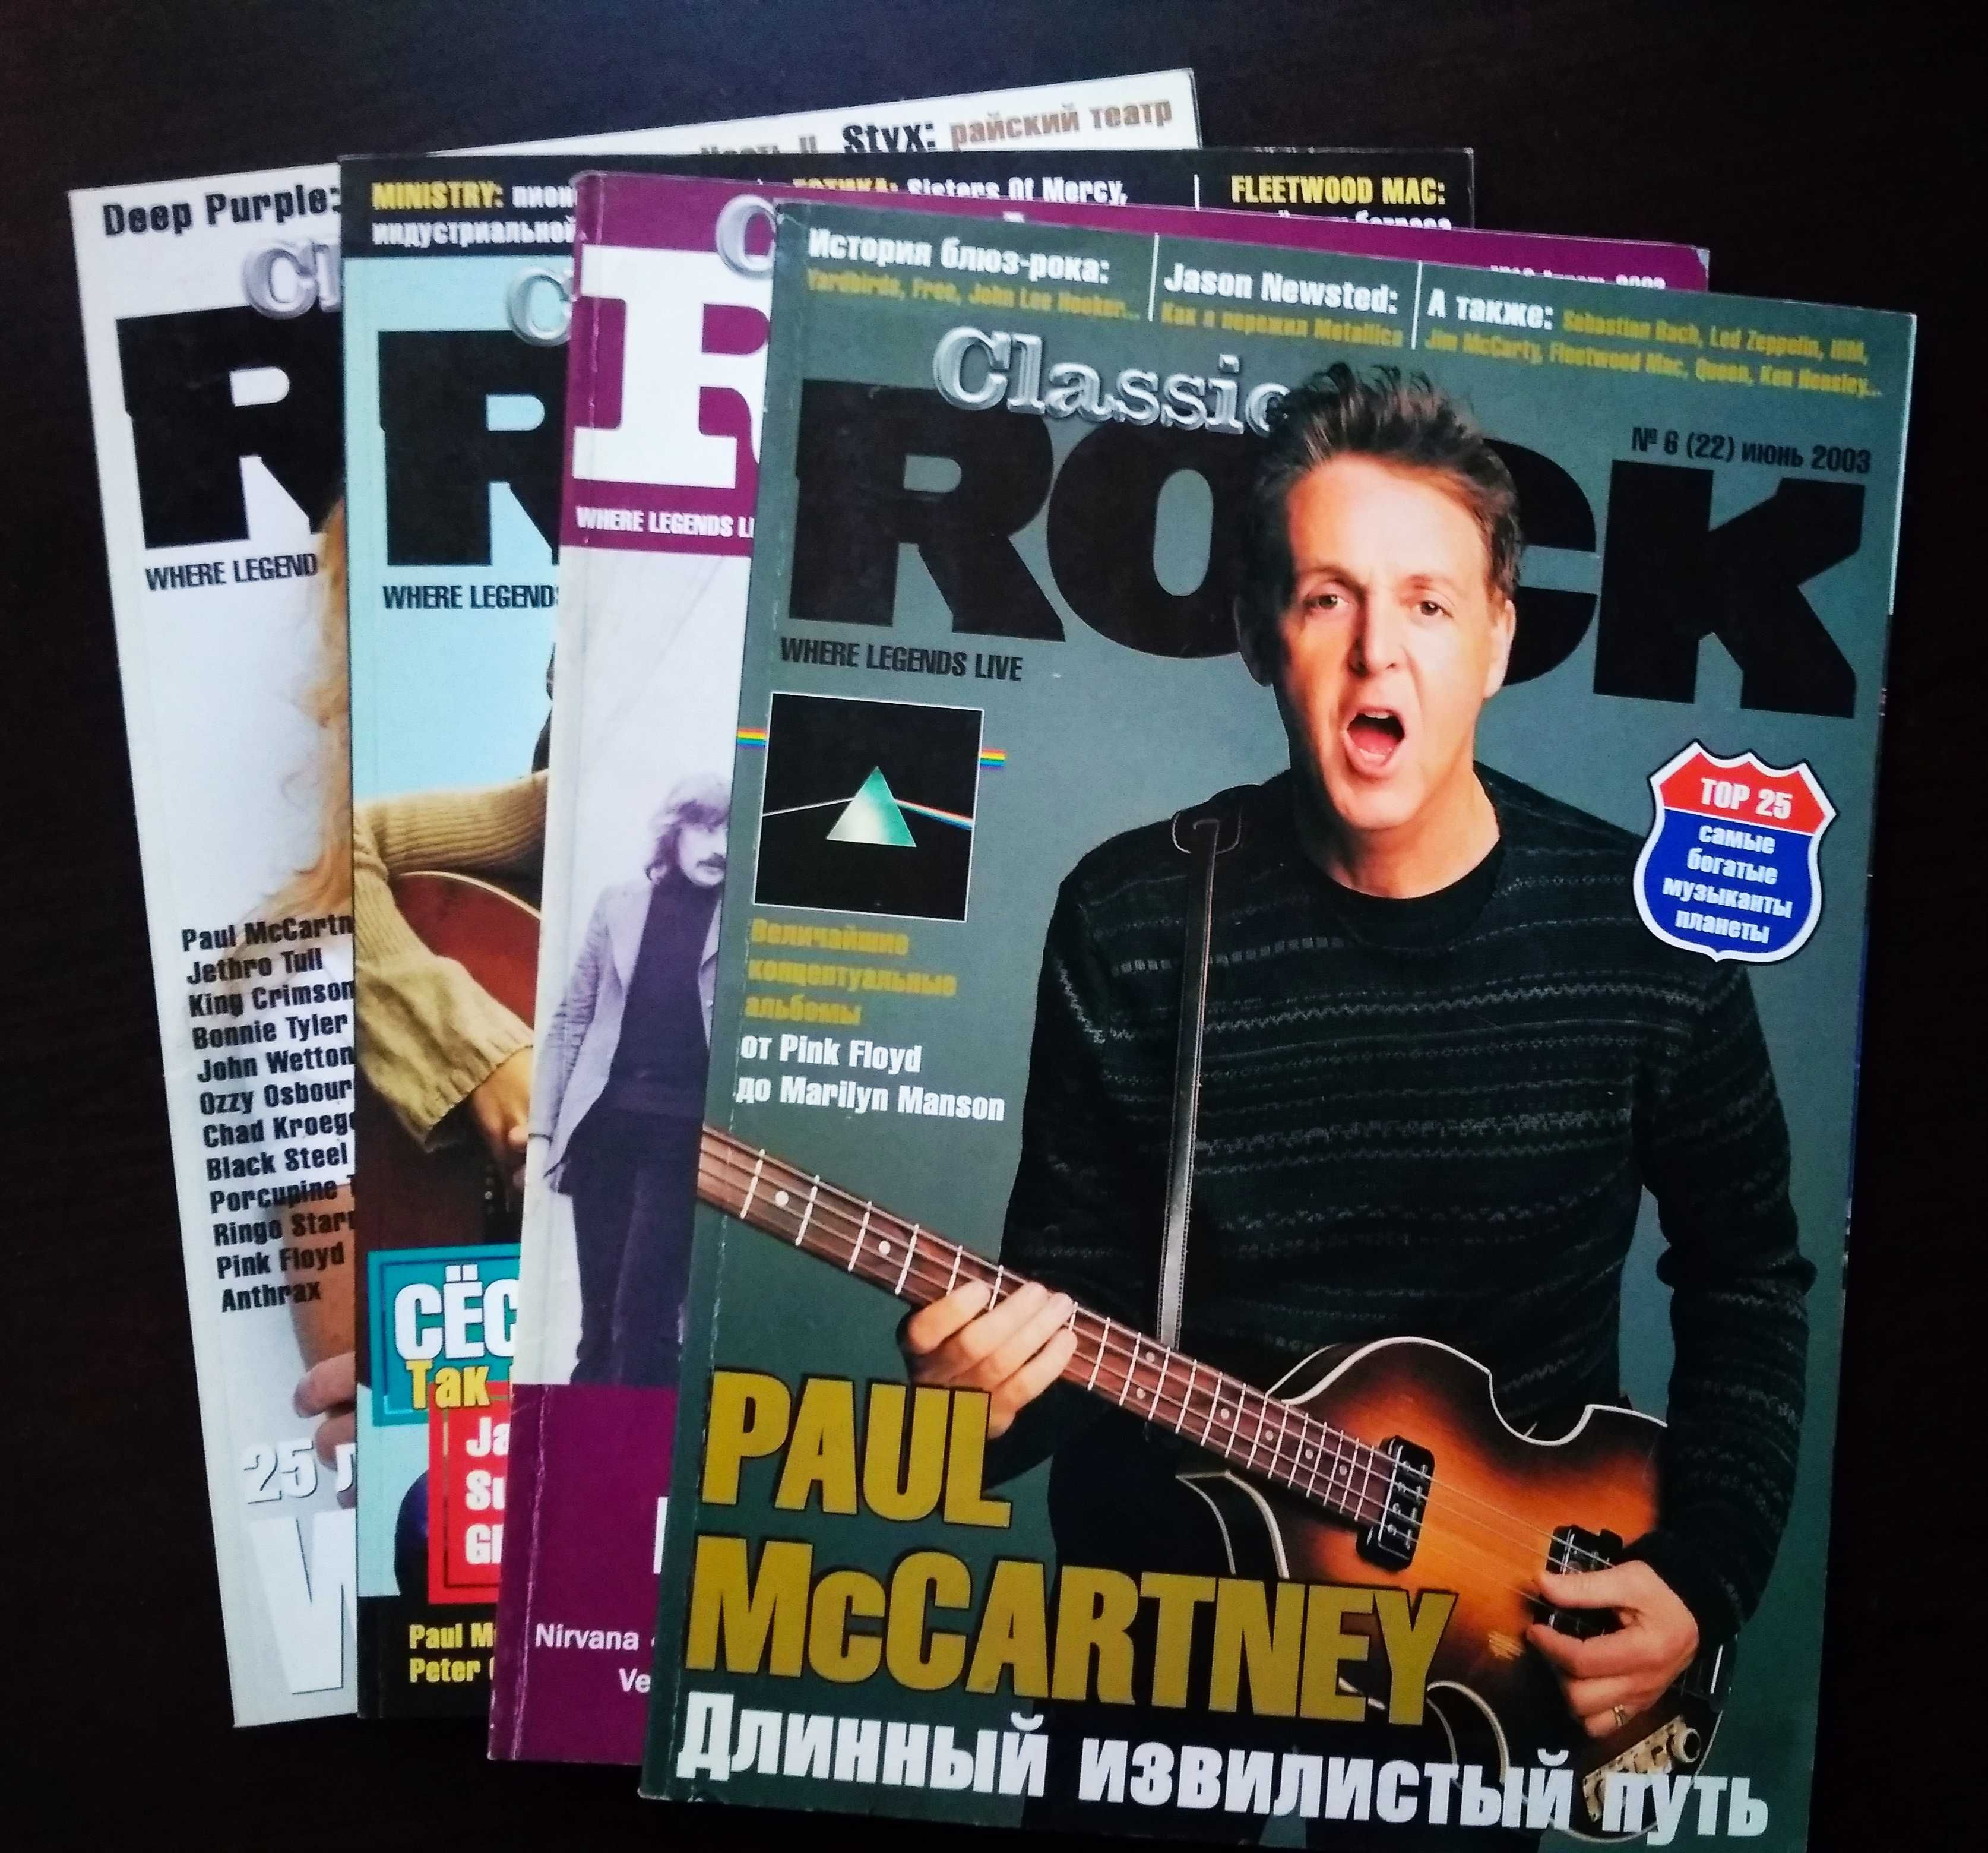 Музыкальные журналы Rolling Stone, PLAY, OM и GQ, Men's Health, ROCK